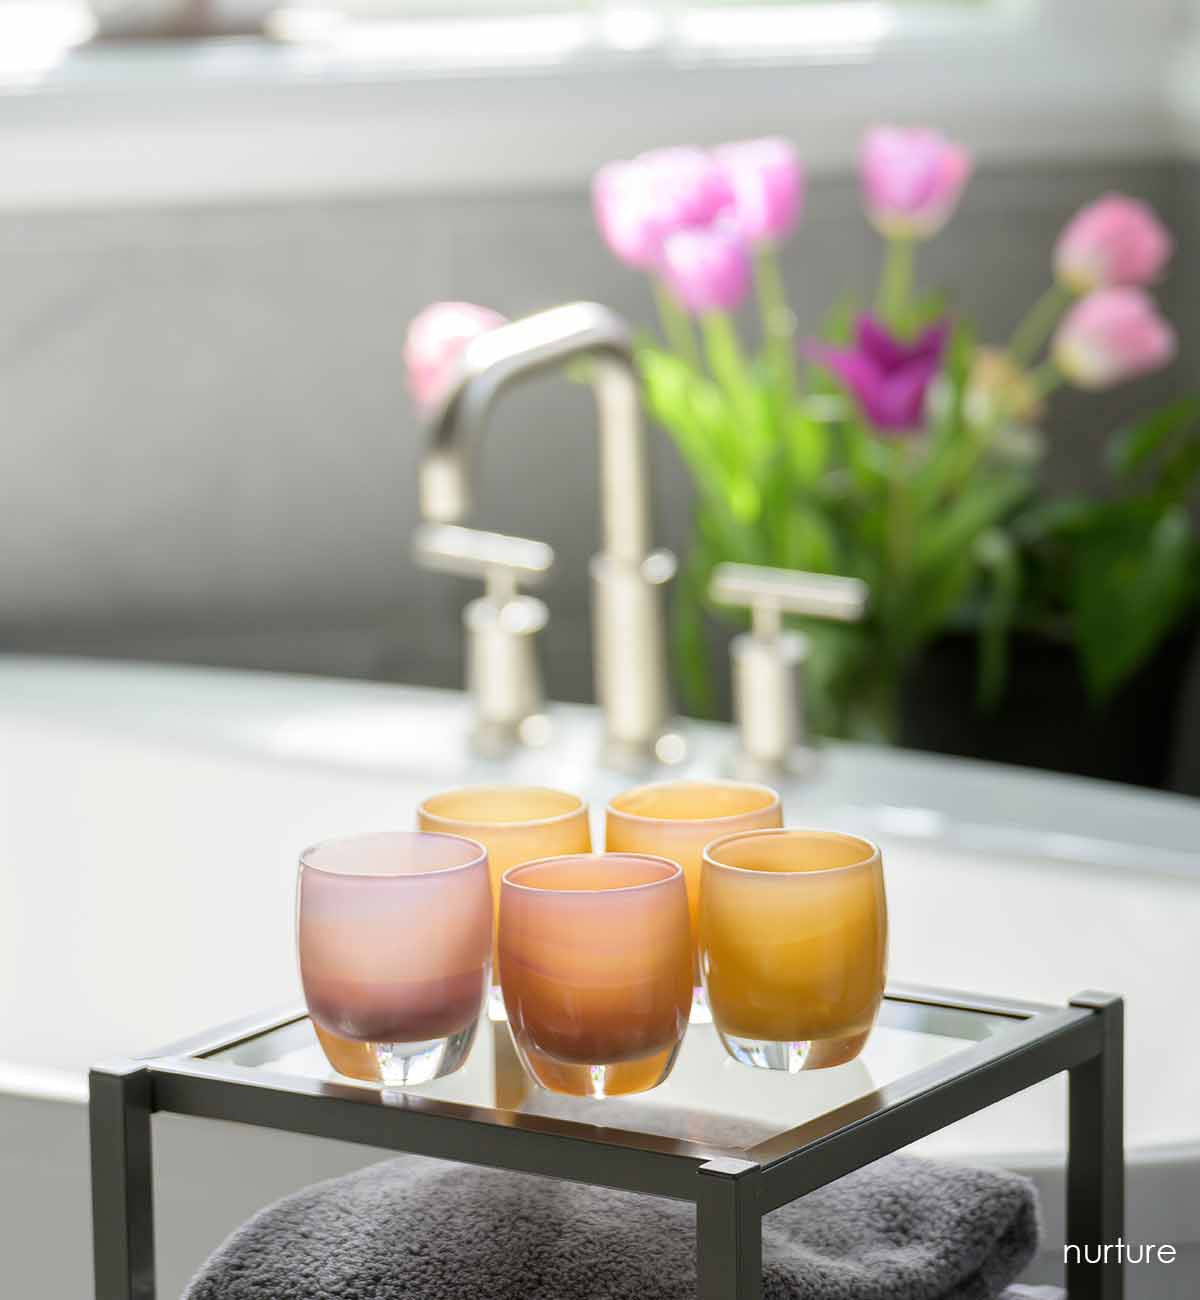 nurture, a peachy hand-blown glass votive candle holder, displayed next to a bathtub and fresh tulips.